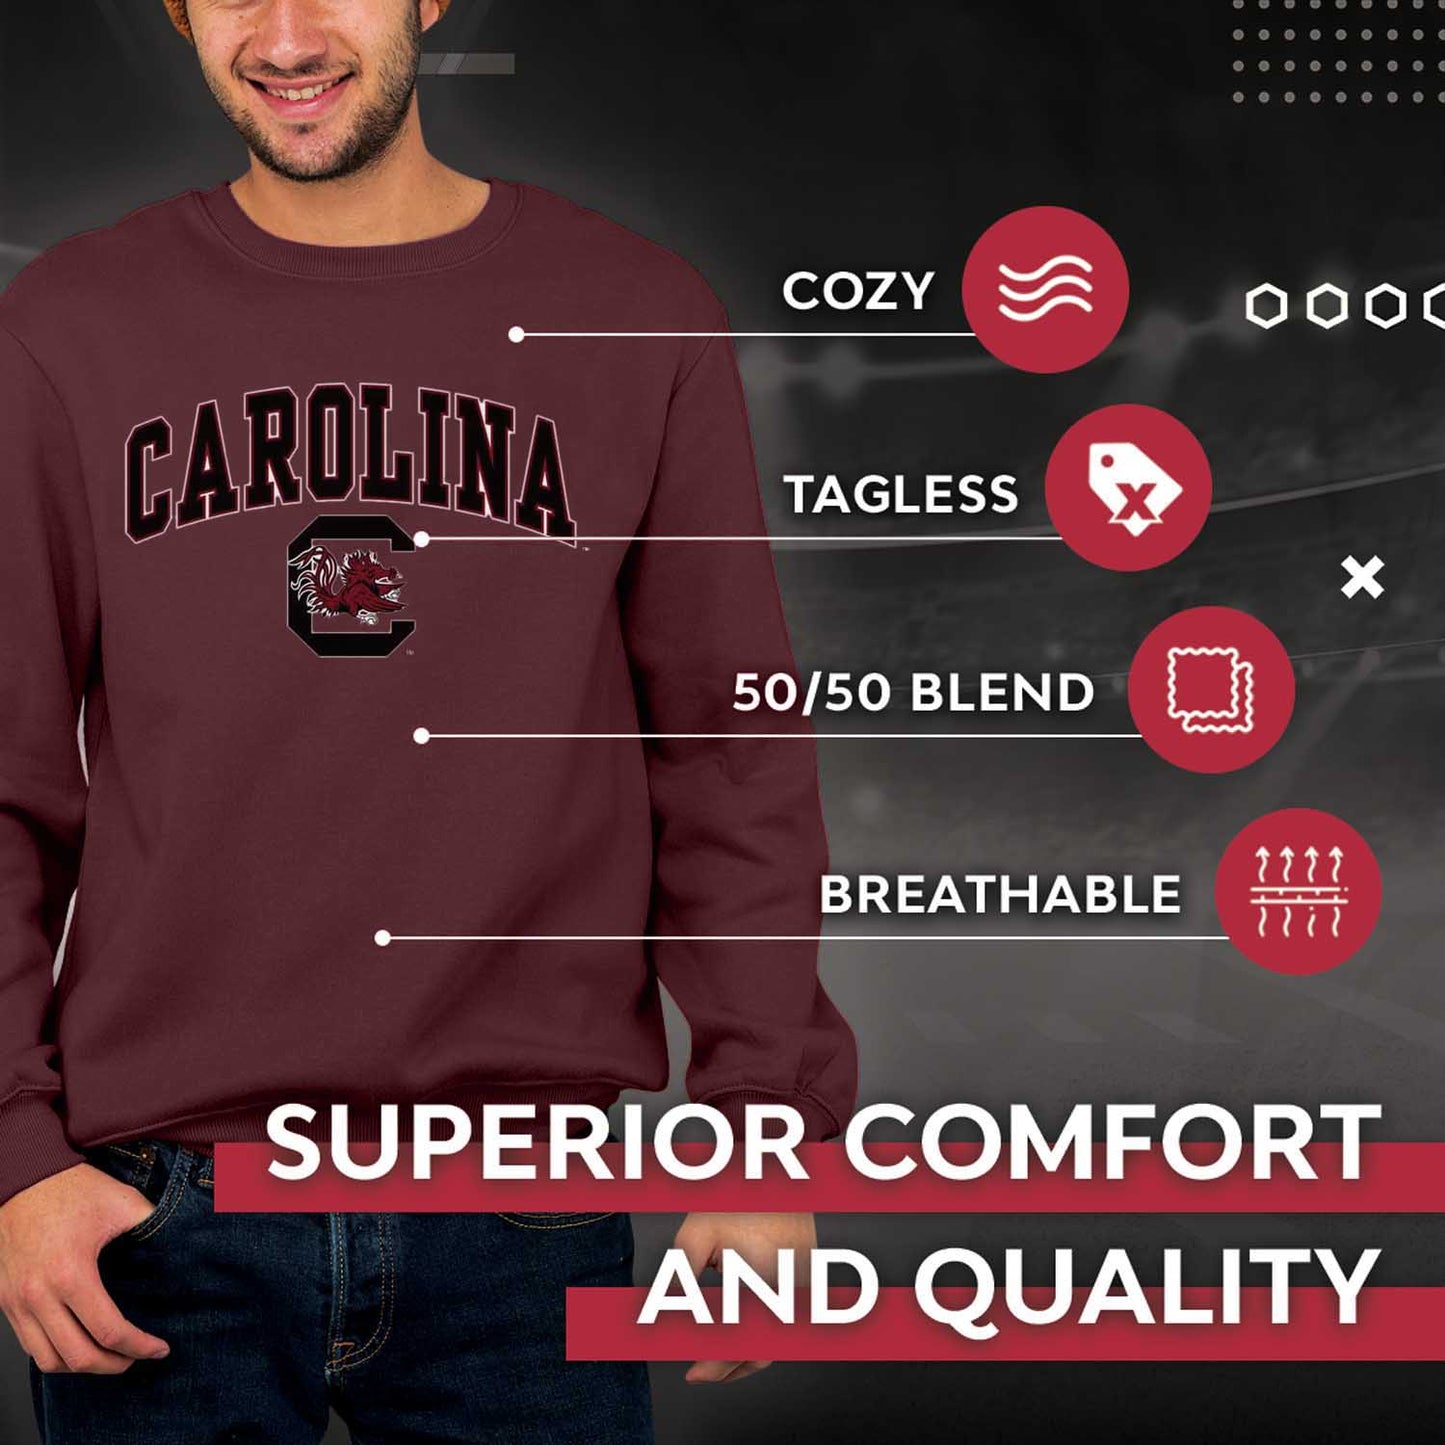 South Carolina Gamecocks Adult Arch & Logo Soft Style Gameday Crewneck Sweatshirt - Maroon